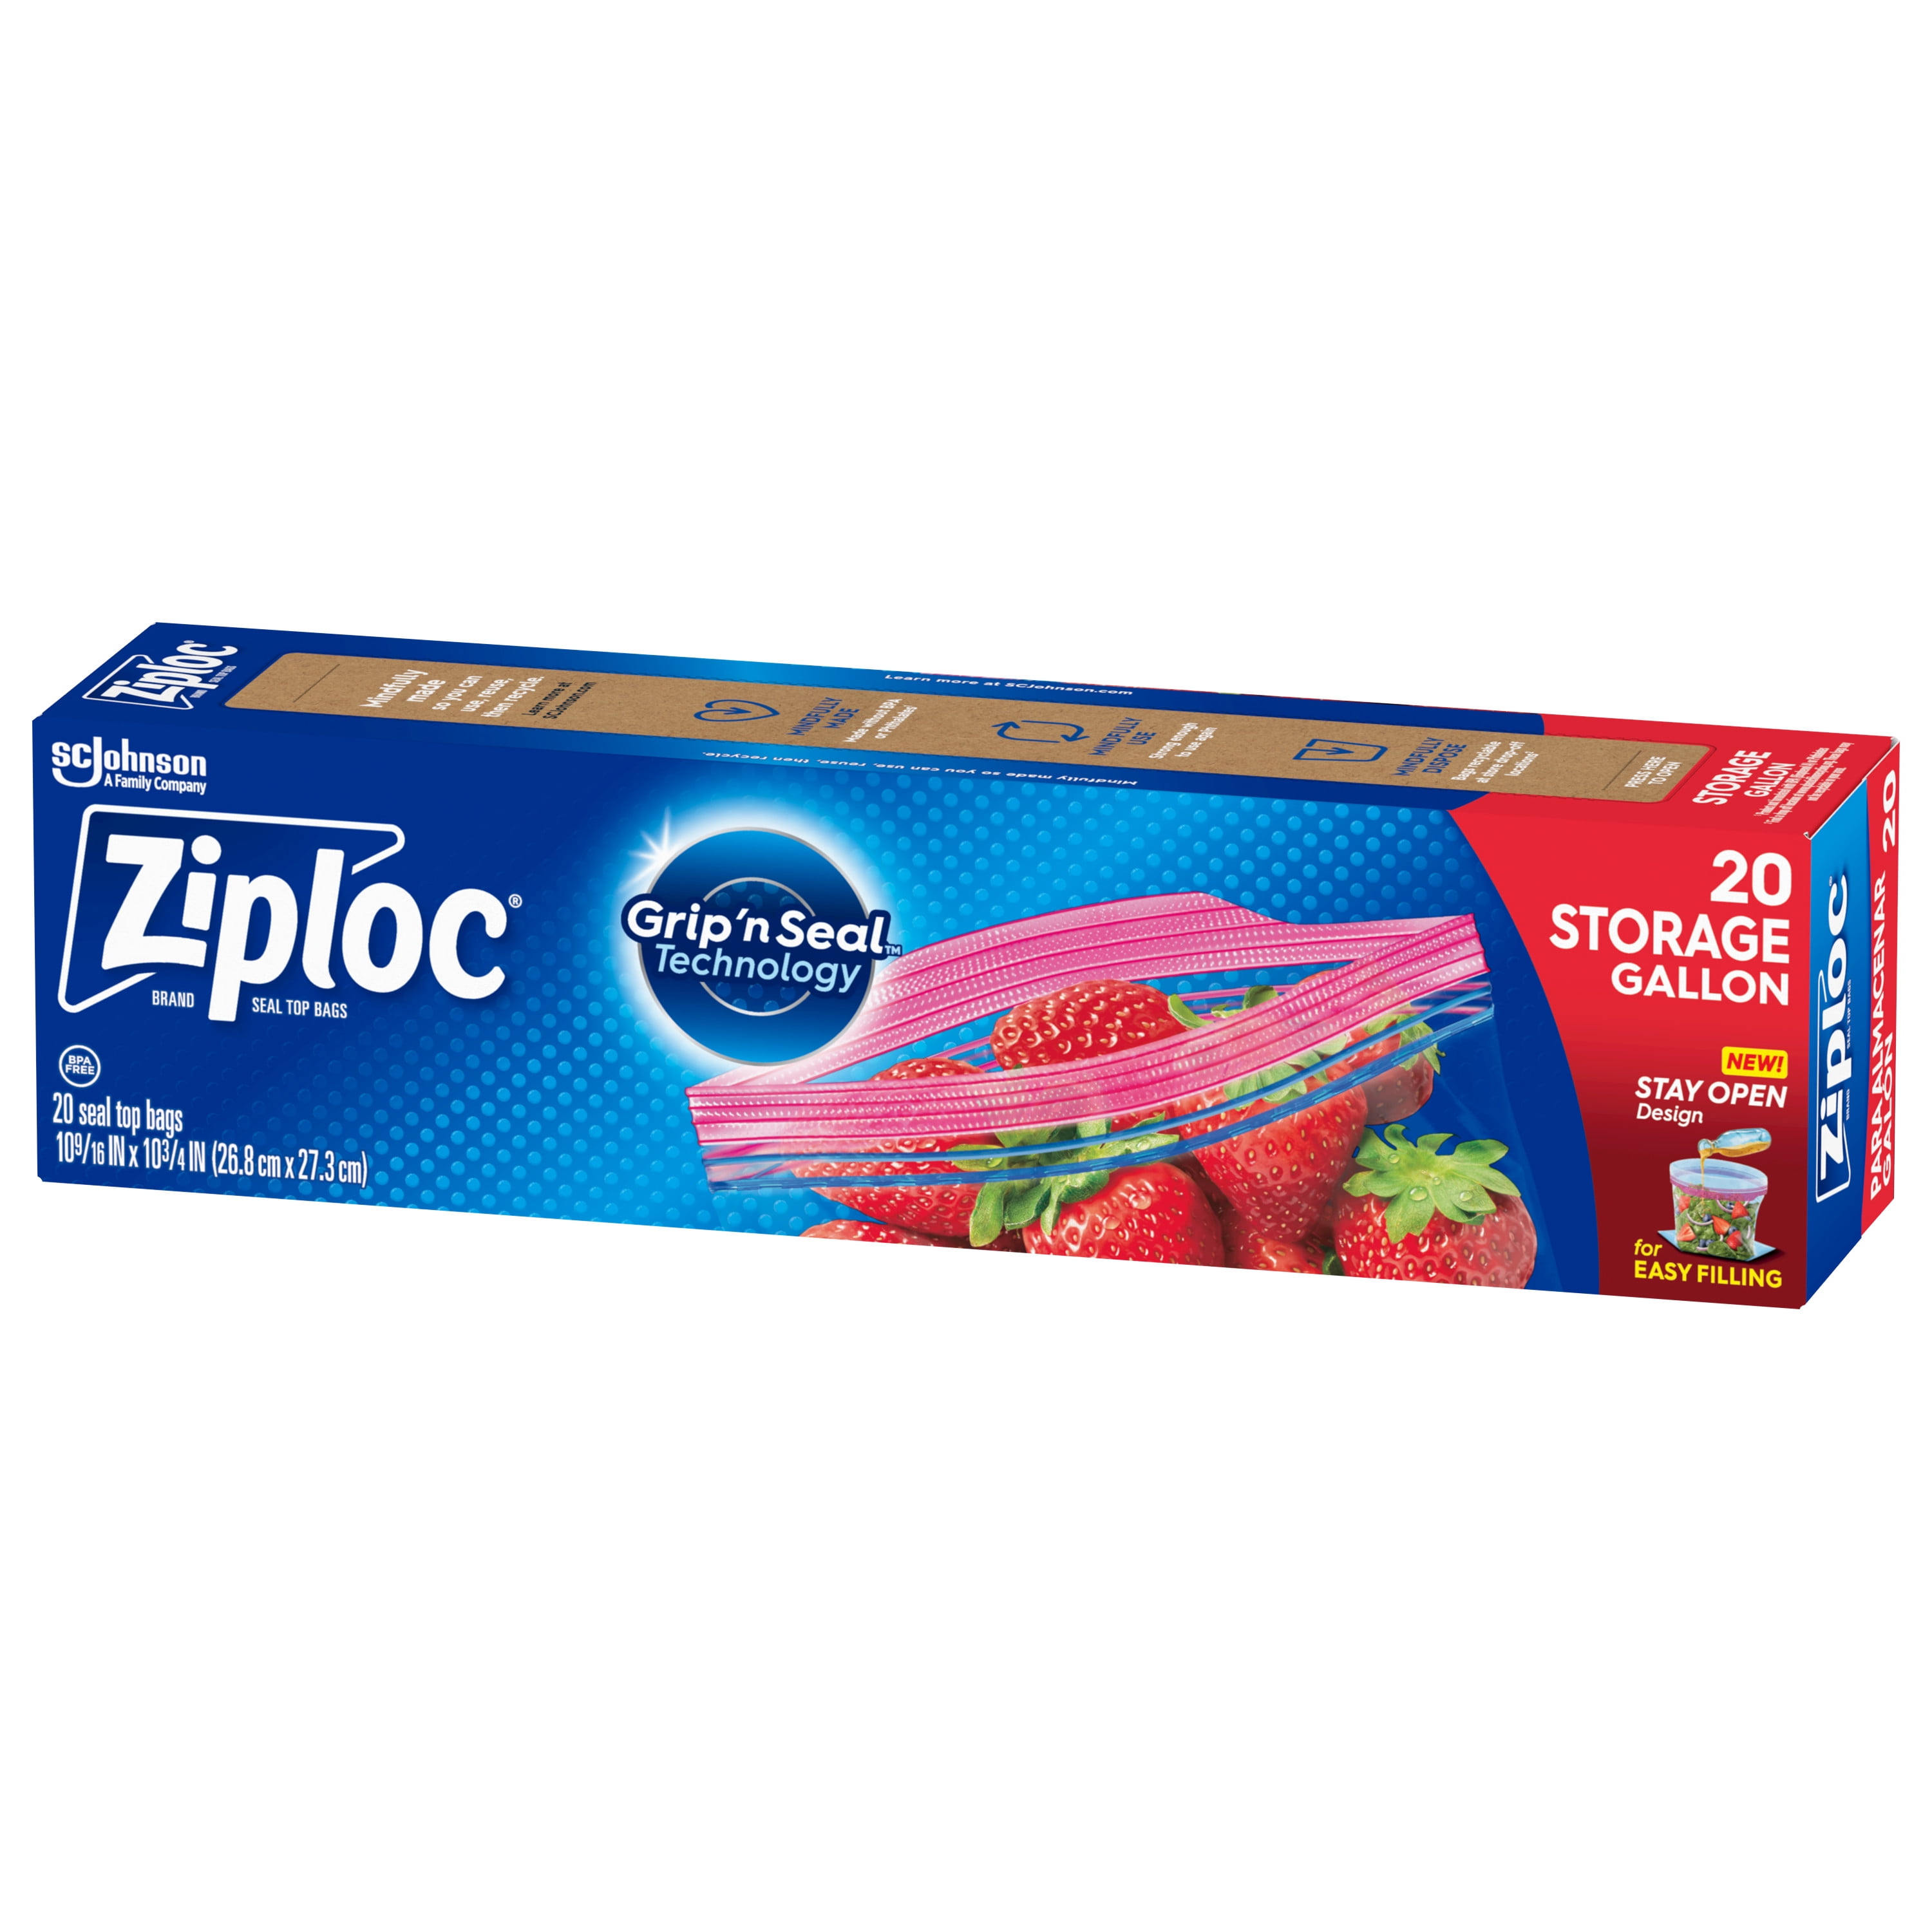 Customer Reviews: Ziploc Brand Storage Gallon Bags, Large Storage